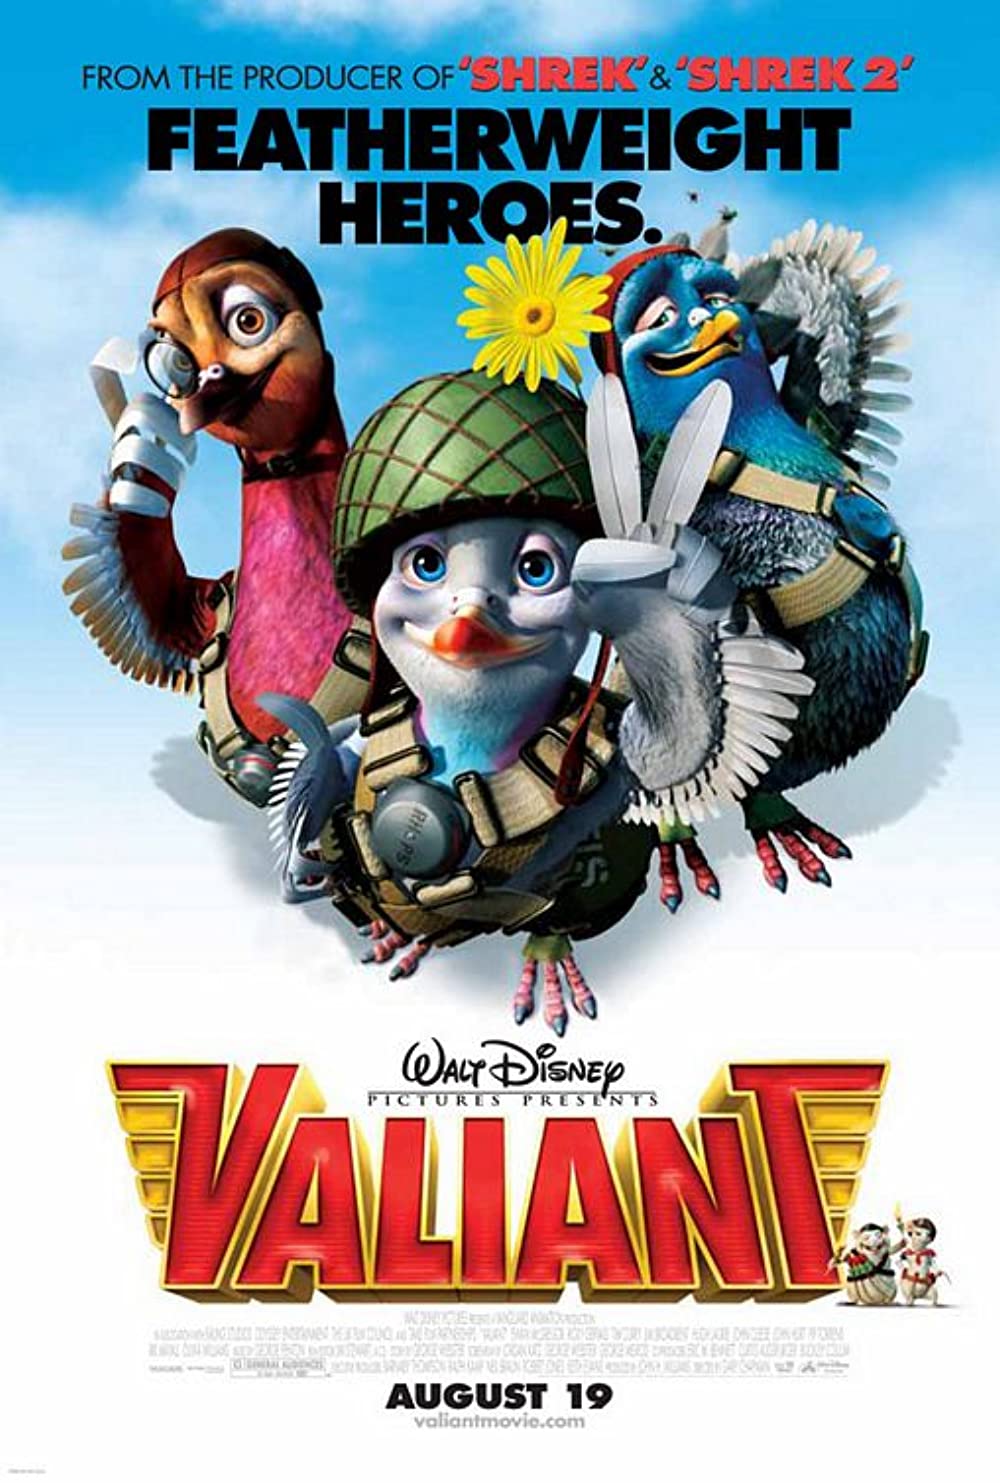 Vaillant, pigeon de combat ! (2005)